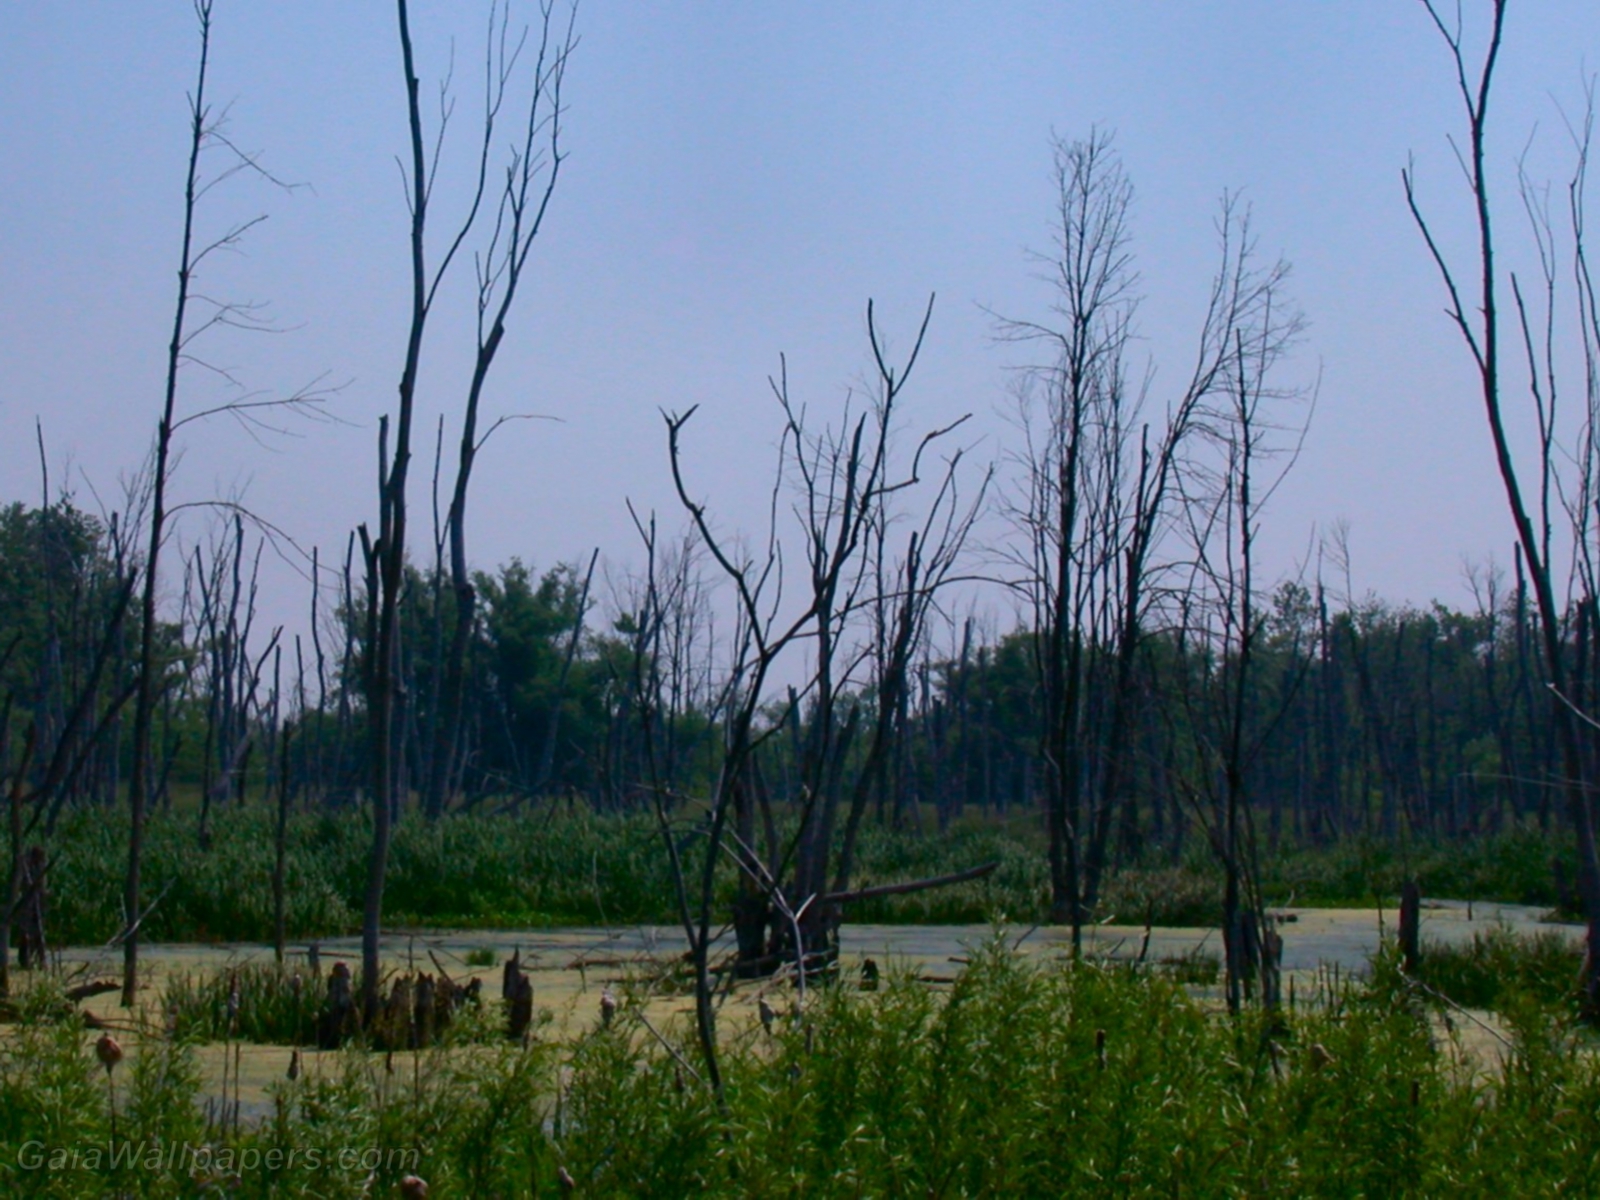 Dead trees in the swamp - Free desktop wallpapers